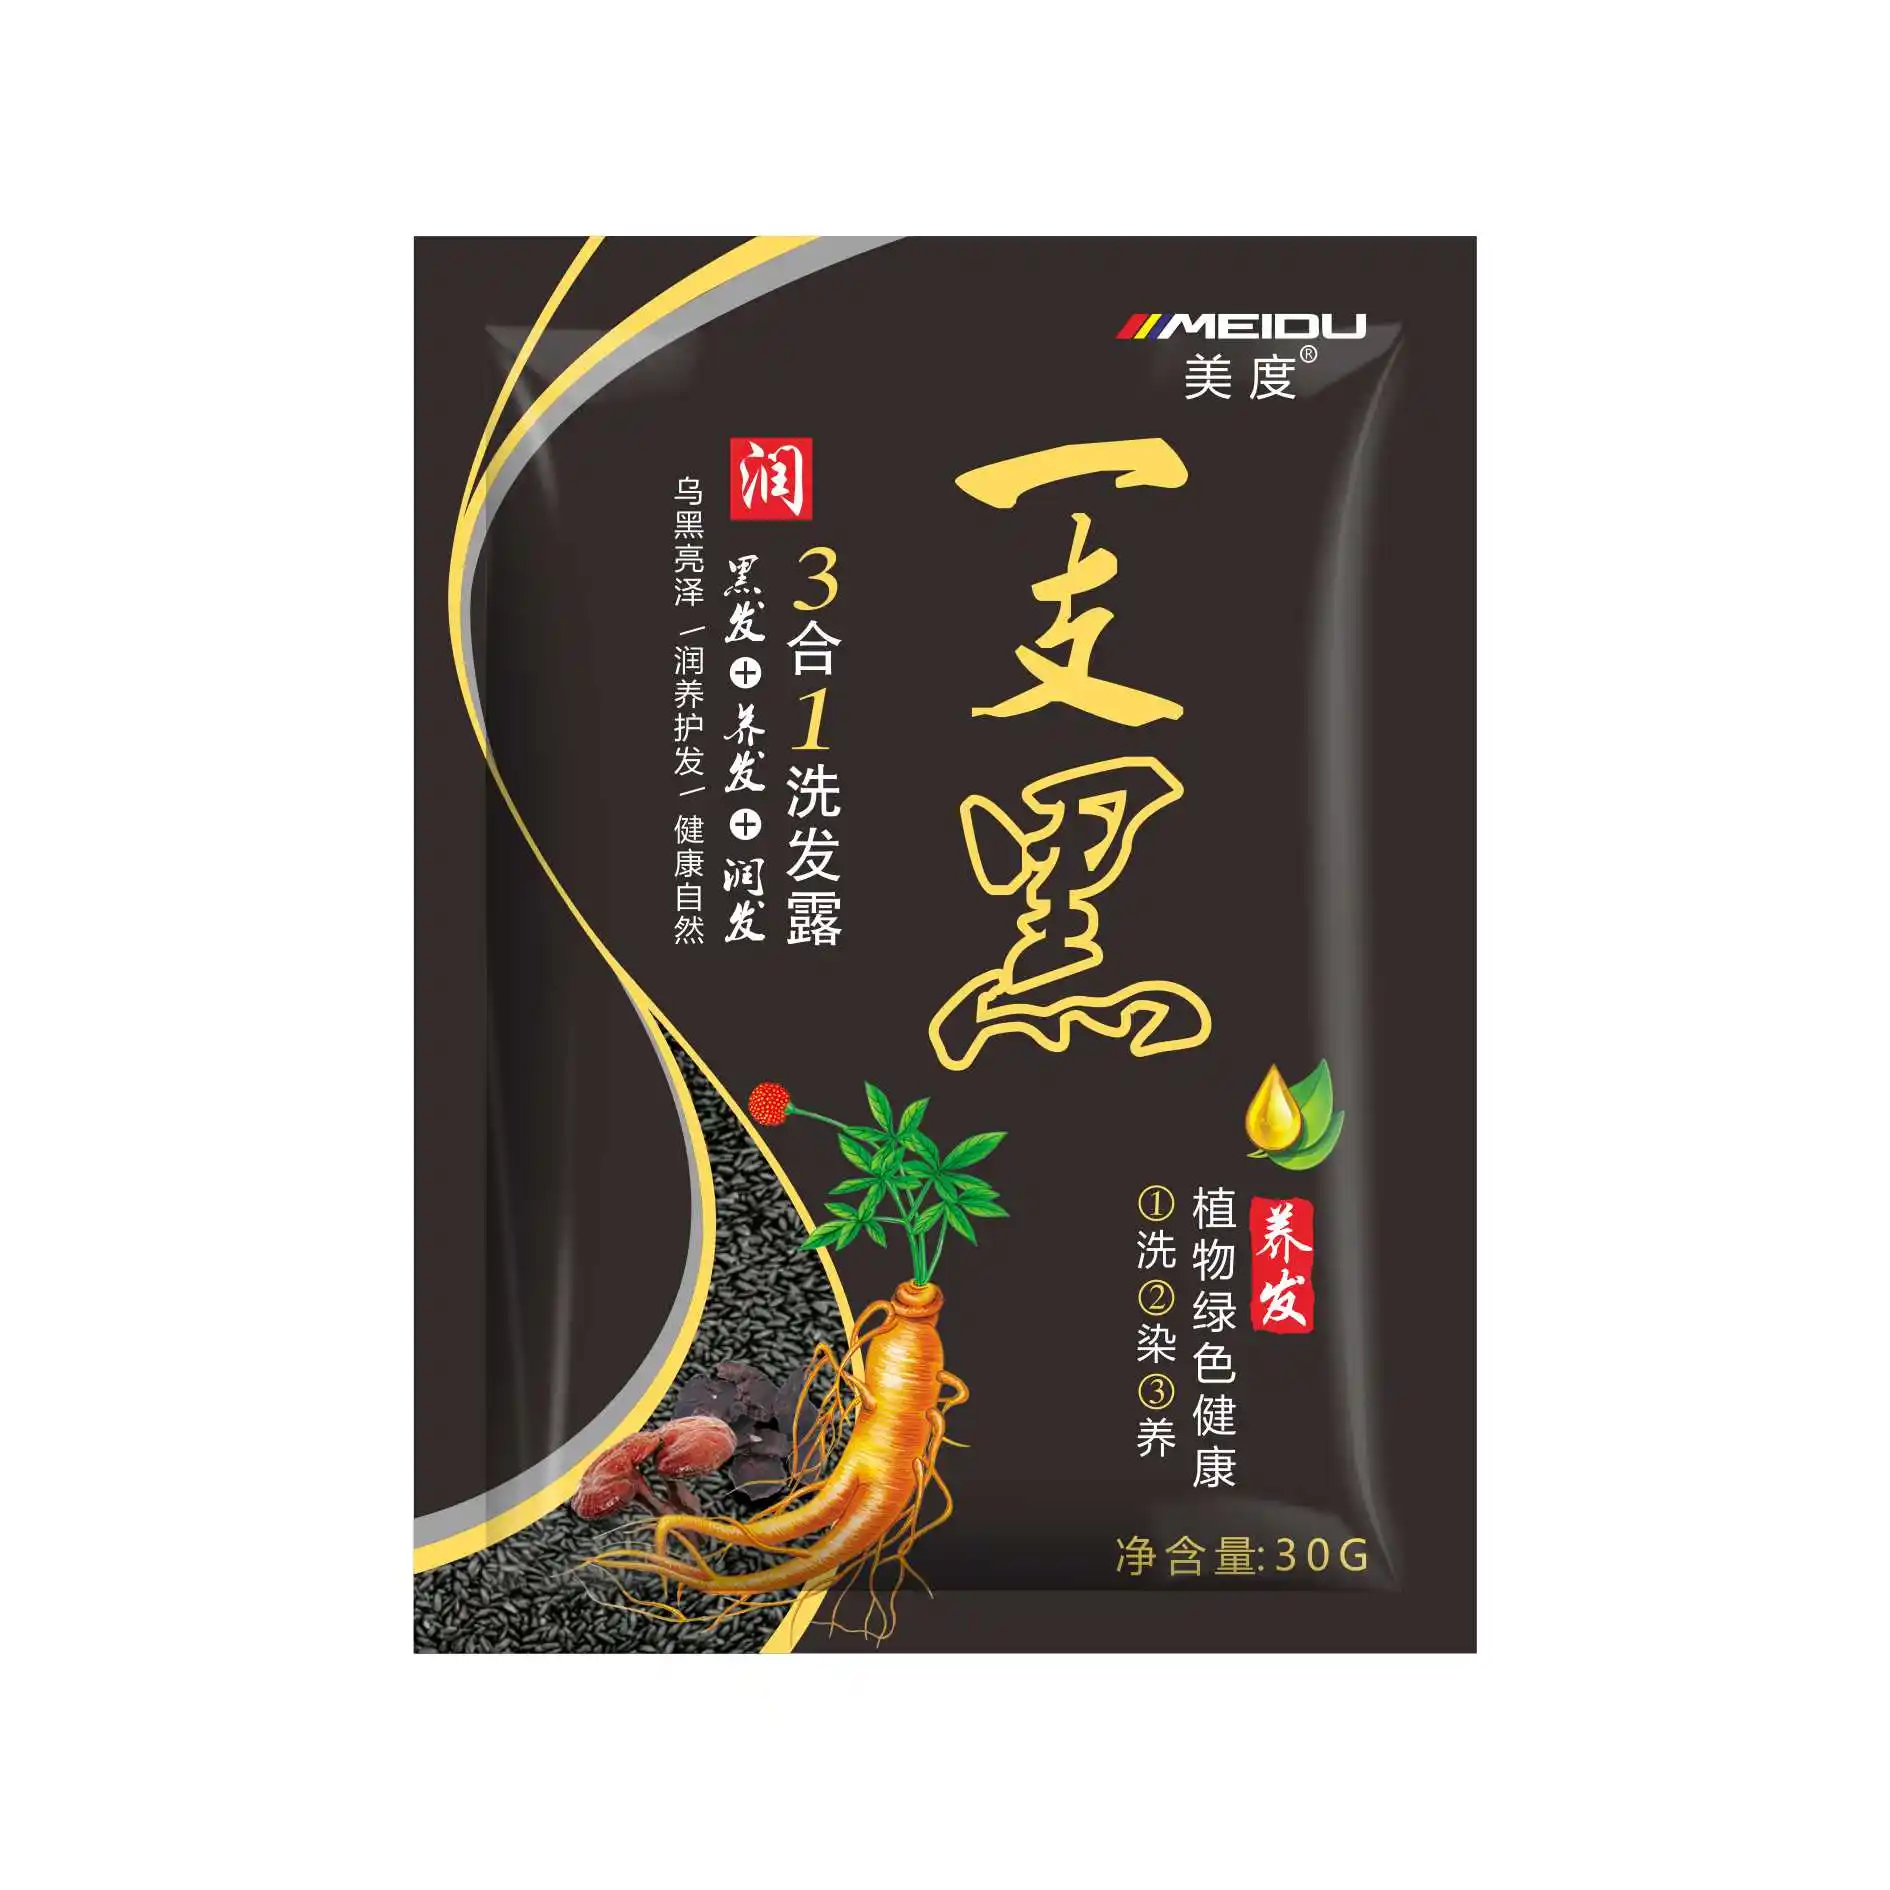 MEIDU 핫 세일 manufacturer 영구 natural brown 아름다움 black hair dye 샴푸 에 30gm sachet